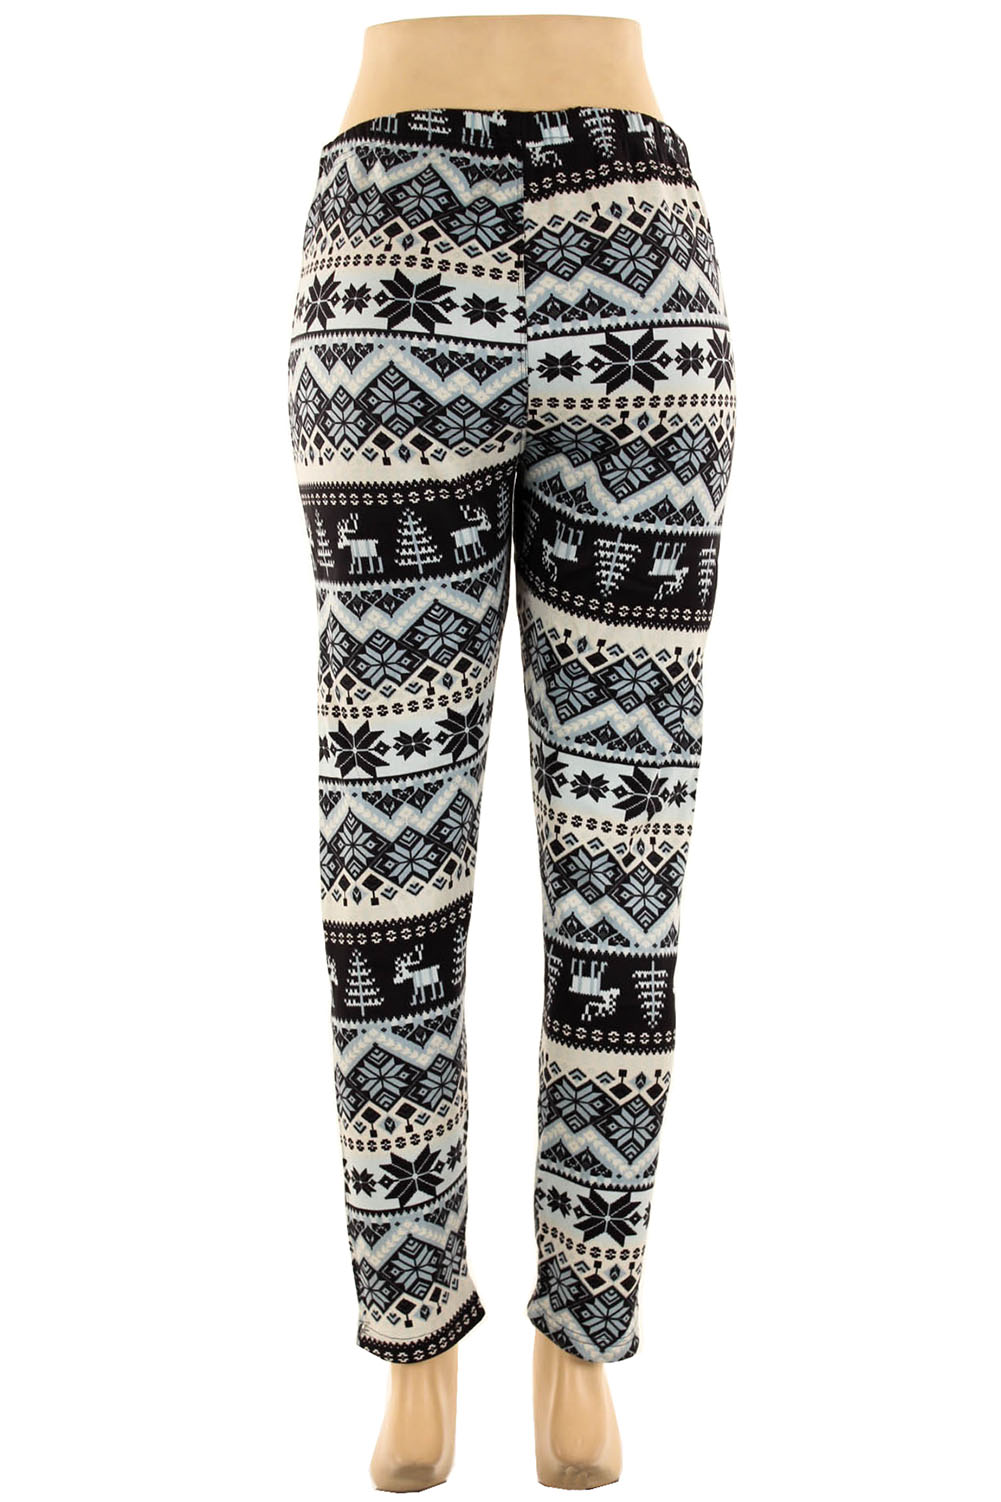 Plus Size Fur Lined Print Leggings Warm Winter Fleece Pants Fits Size ...